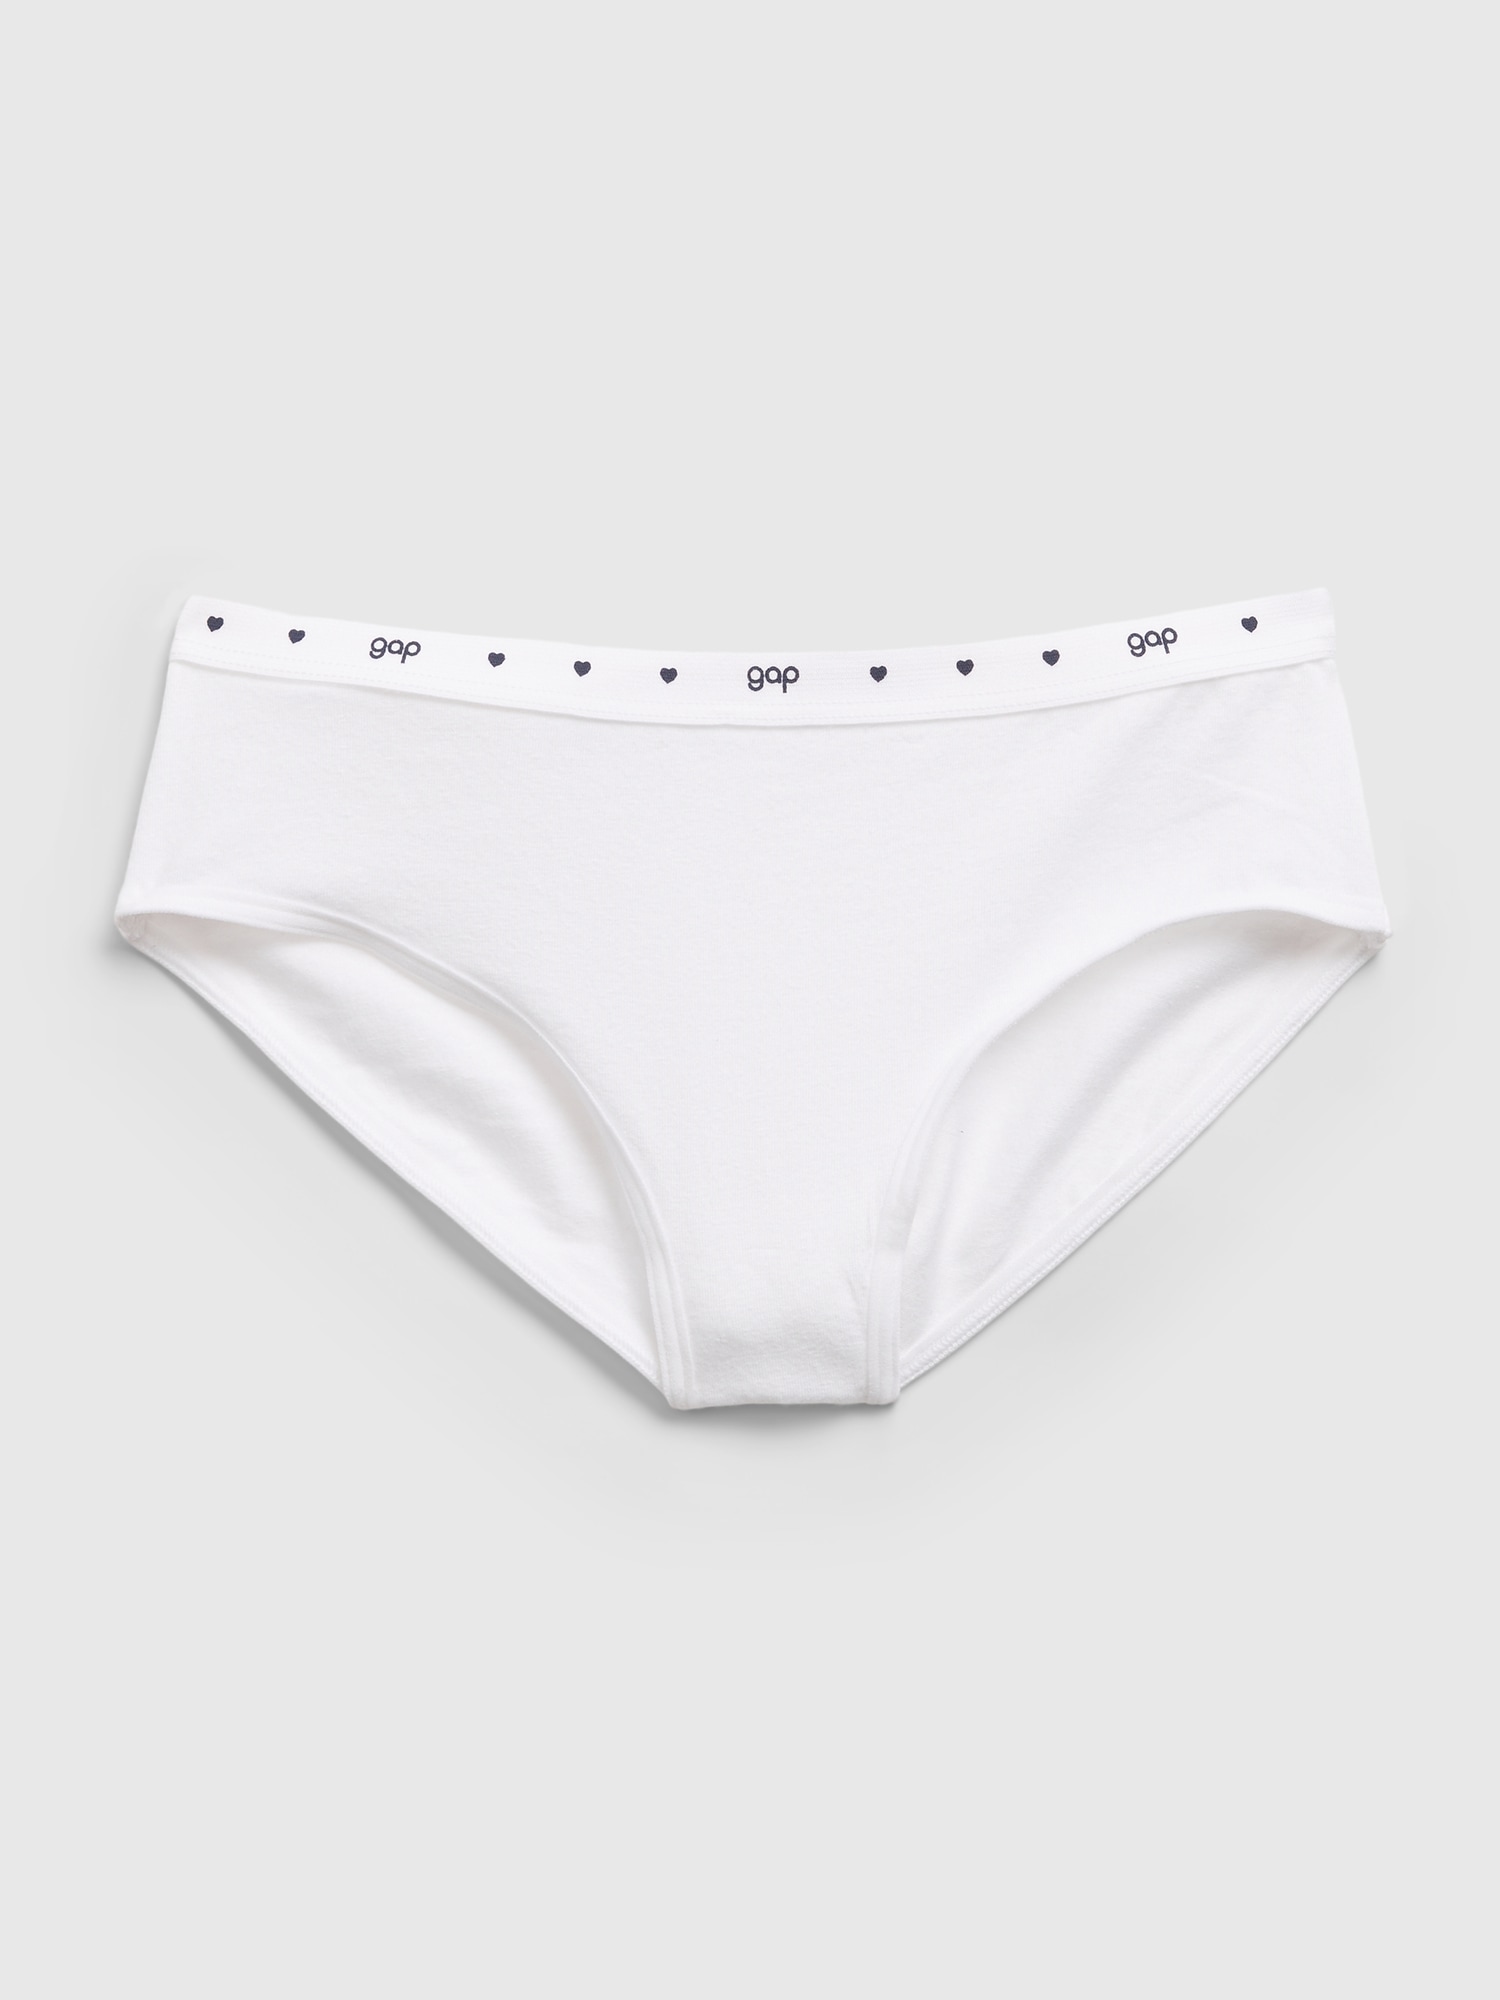 Shop Generic Underwear girl 5 each / lot boys girls cotton boxer Online